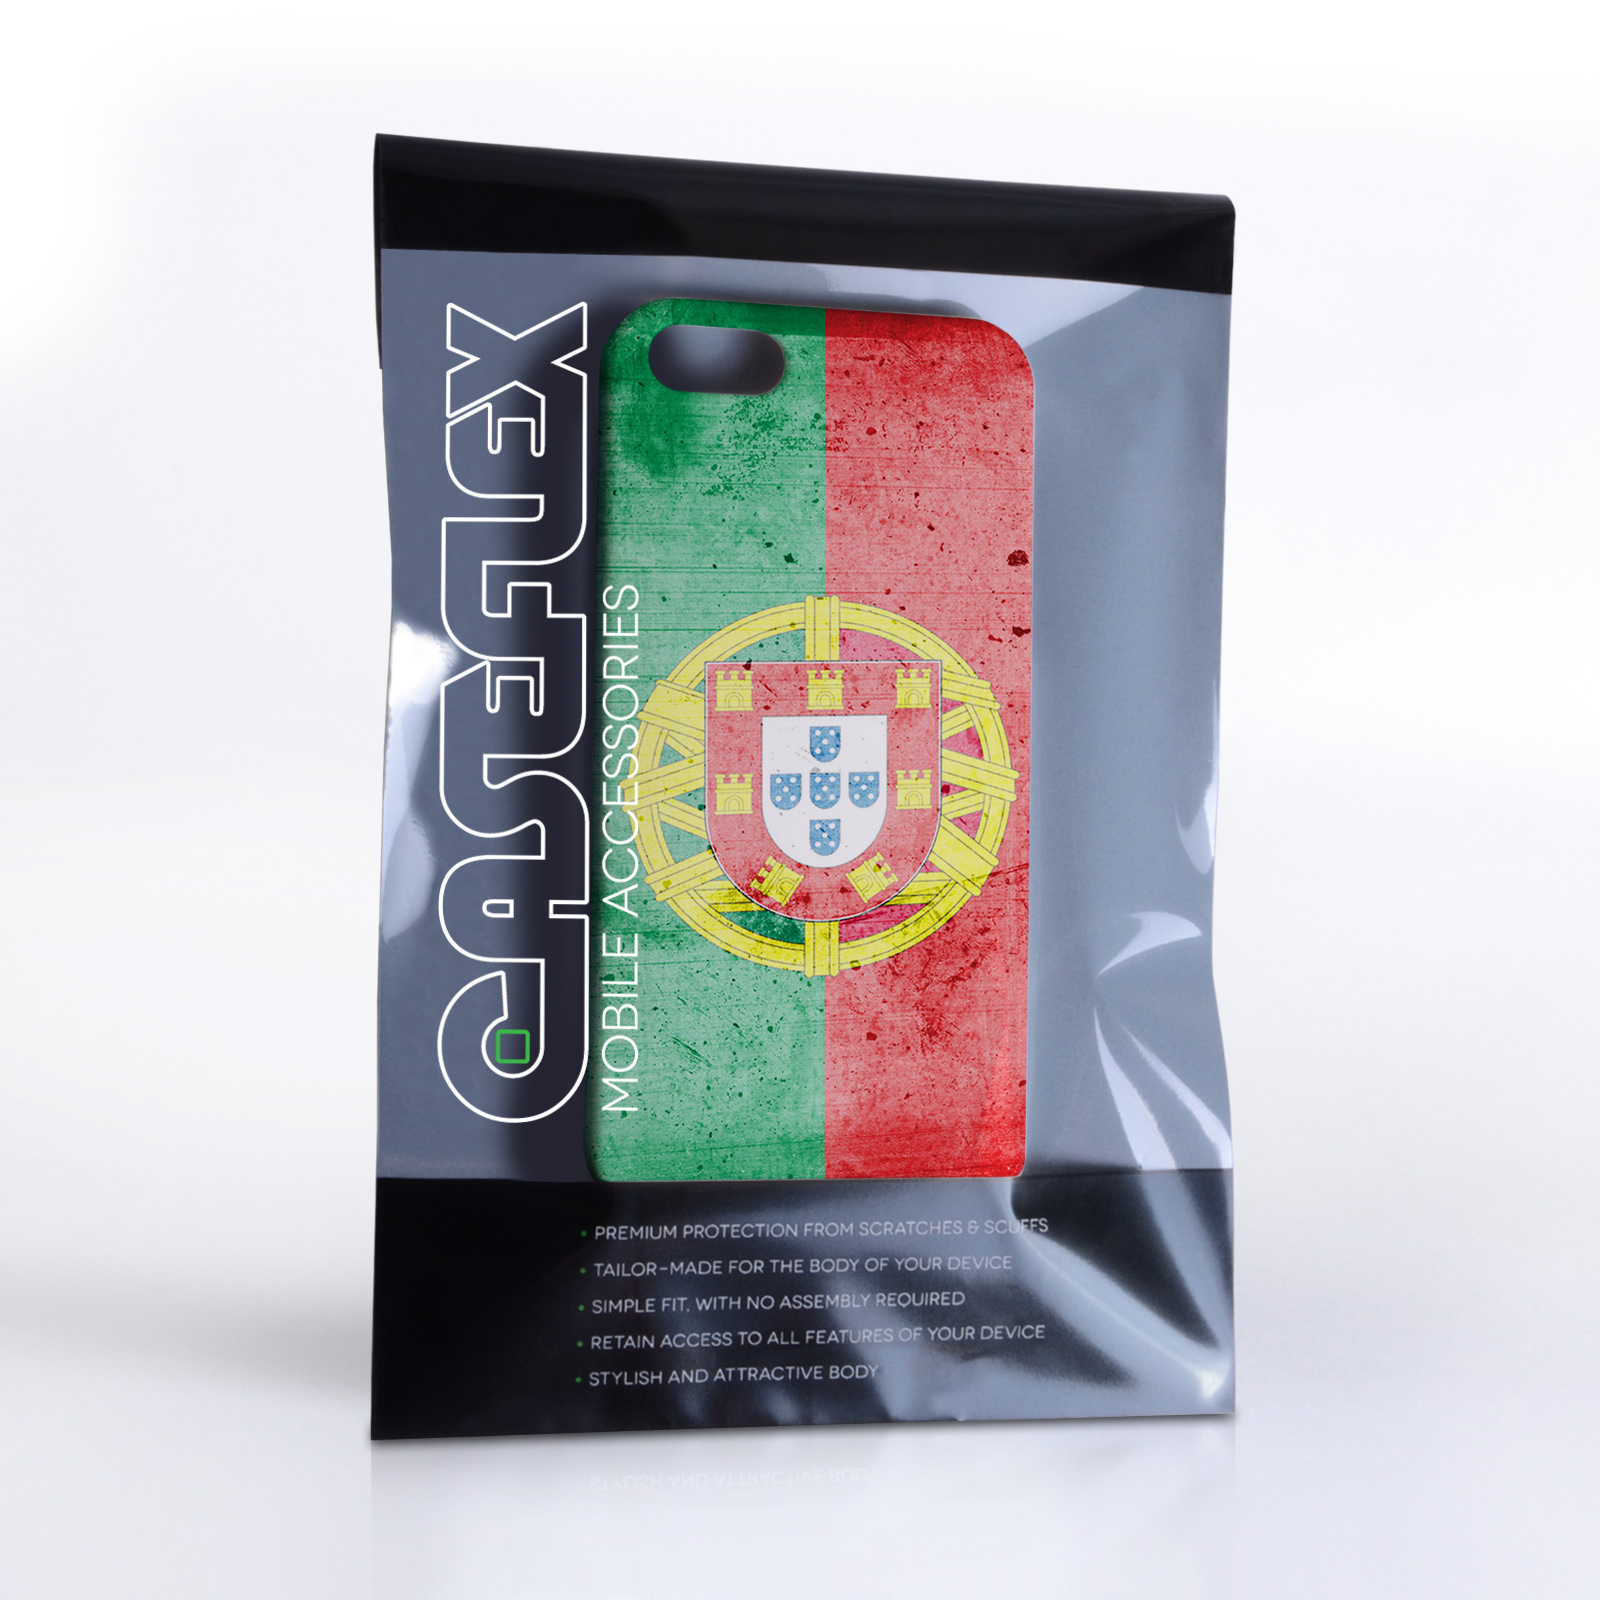 Caseflex iPhone SE Retro Portugal Flag Case